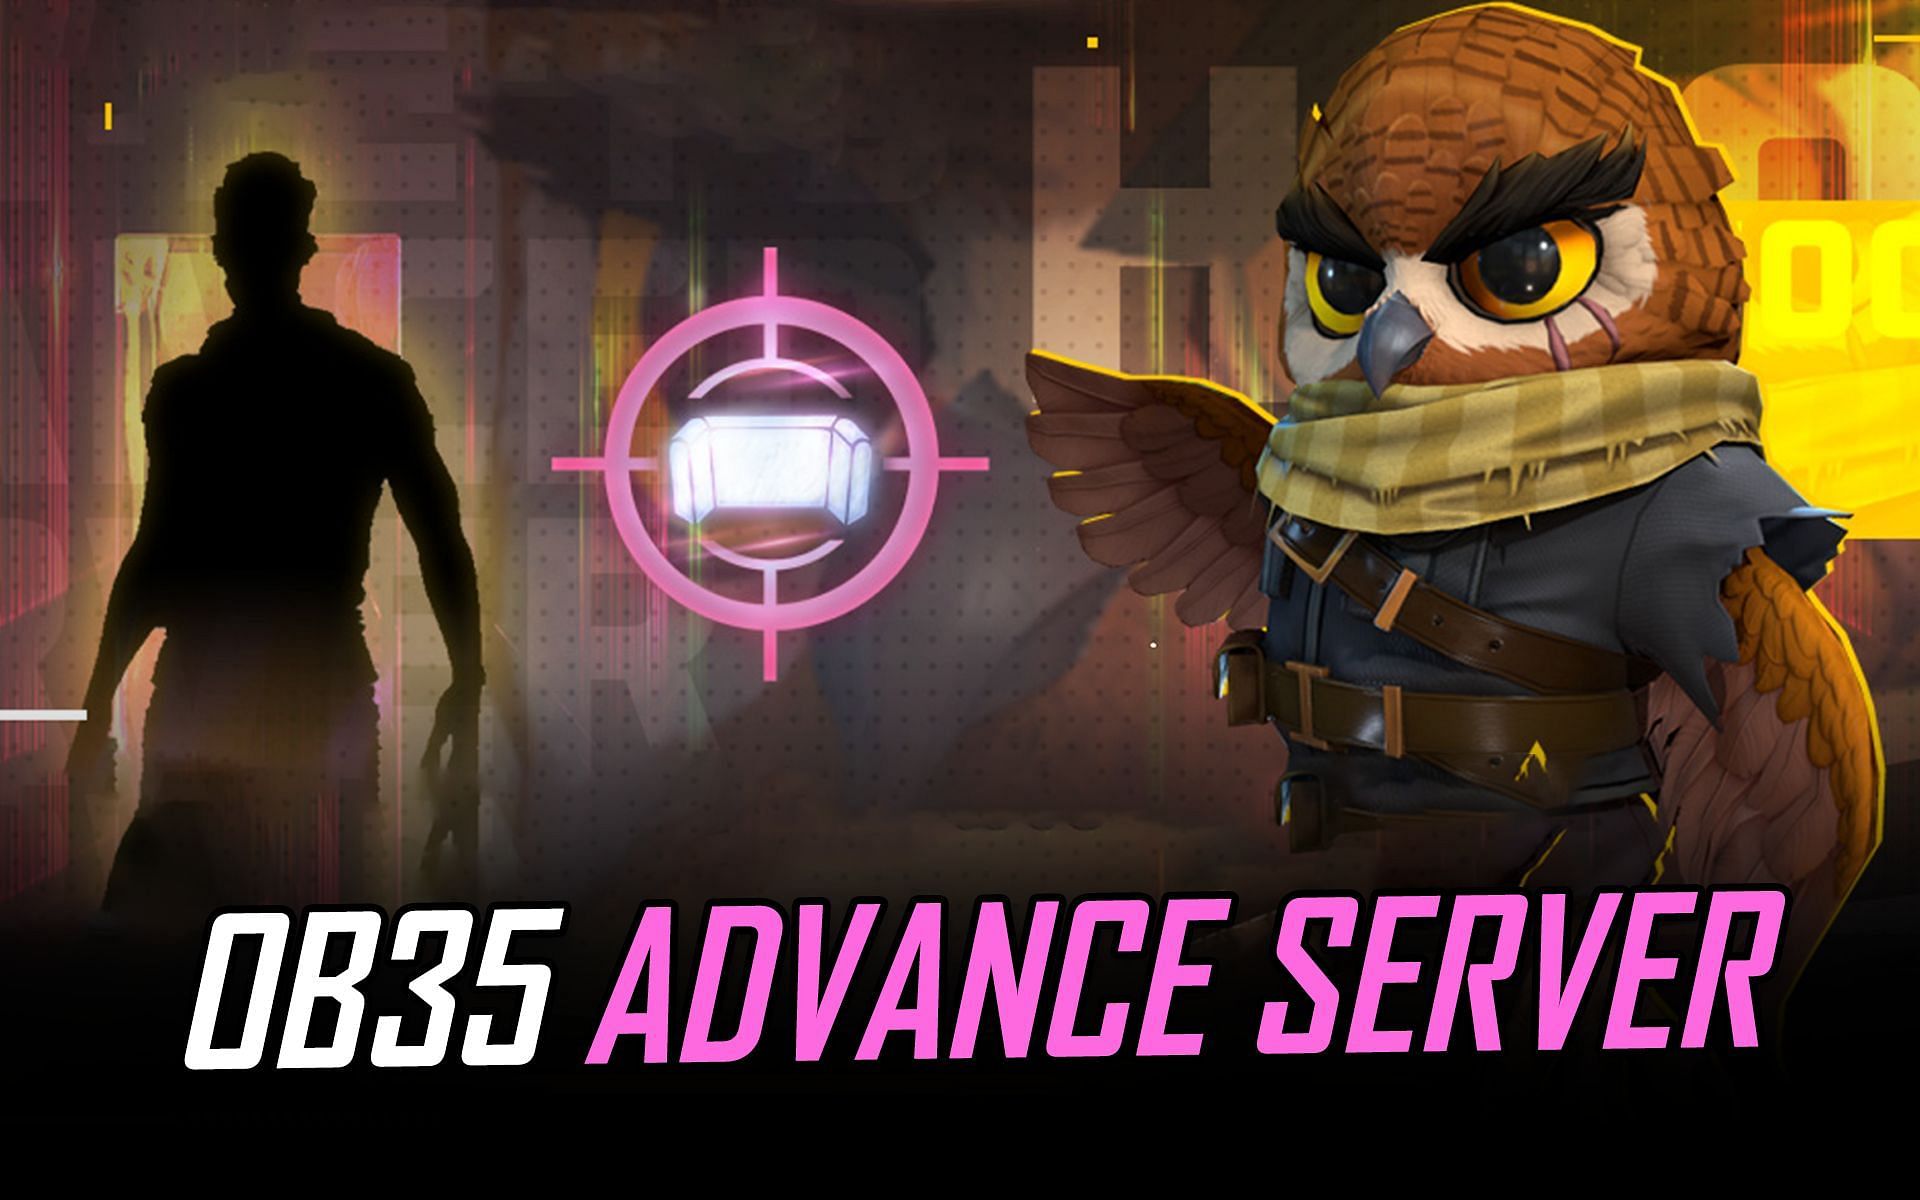 The OB35 Advance Server is now available (Image via Sportskeeda)